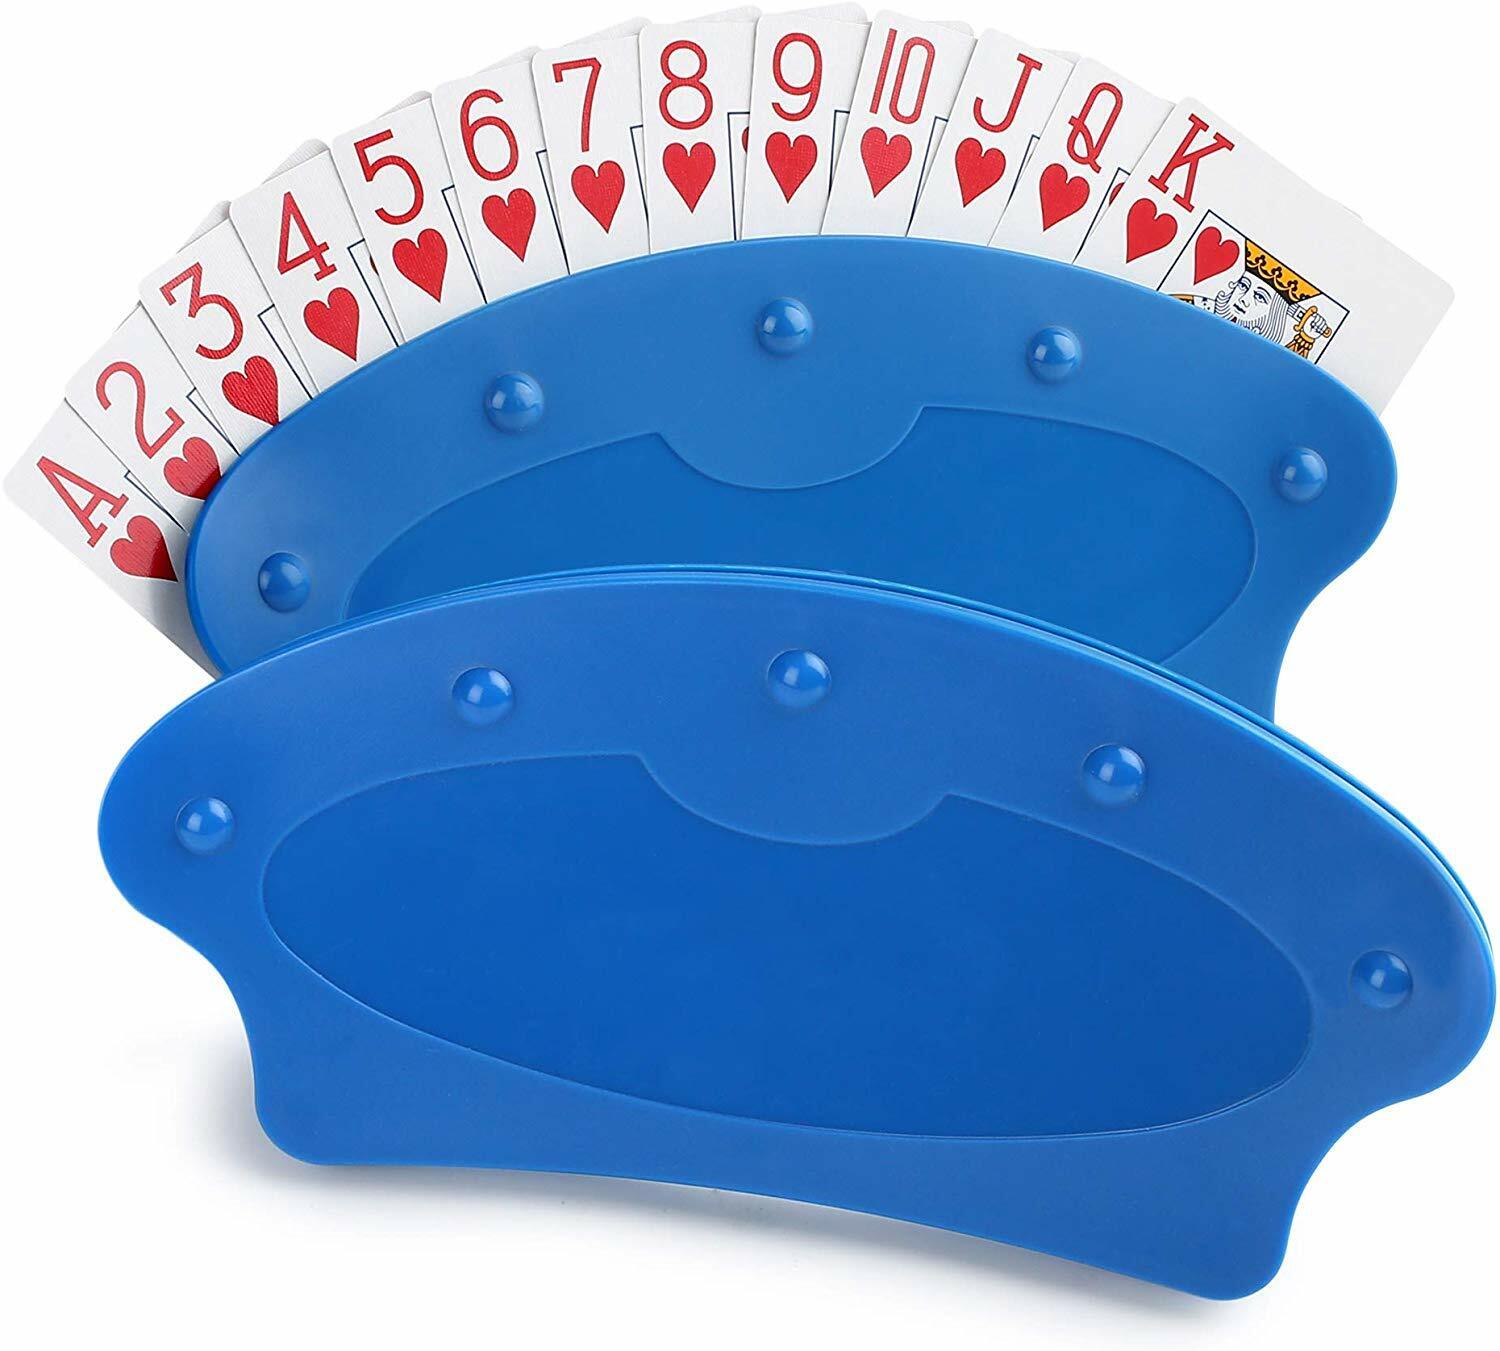 2x Hands Free Playing Card Holders For Kids Senior Poker Tray Racks Organizer